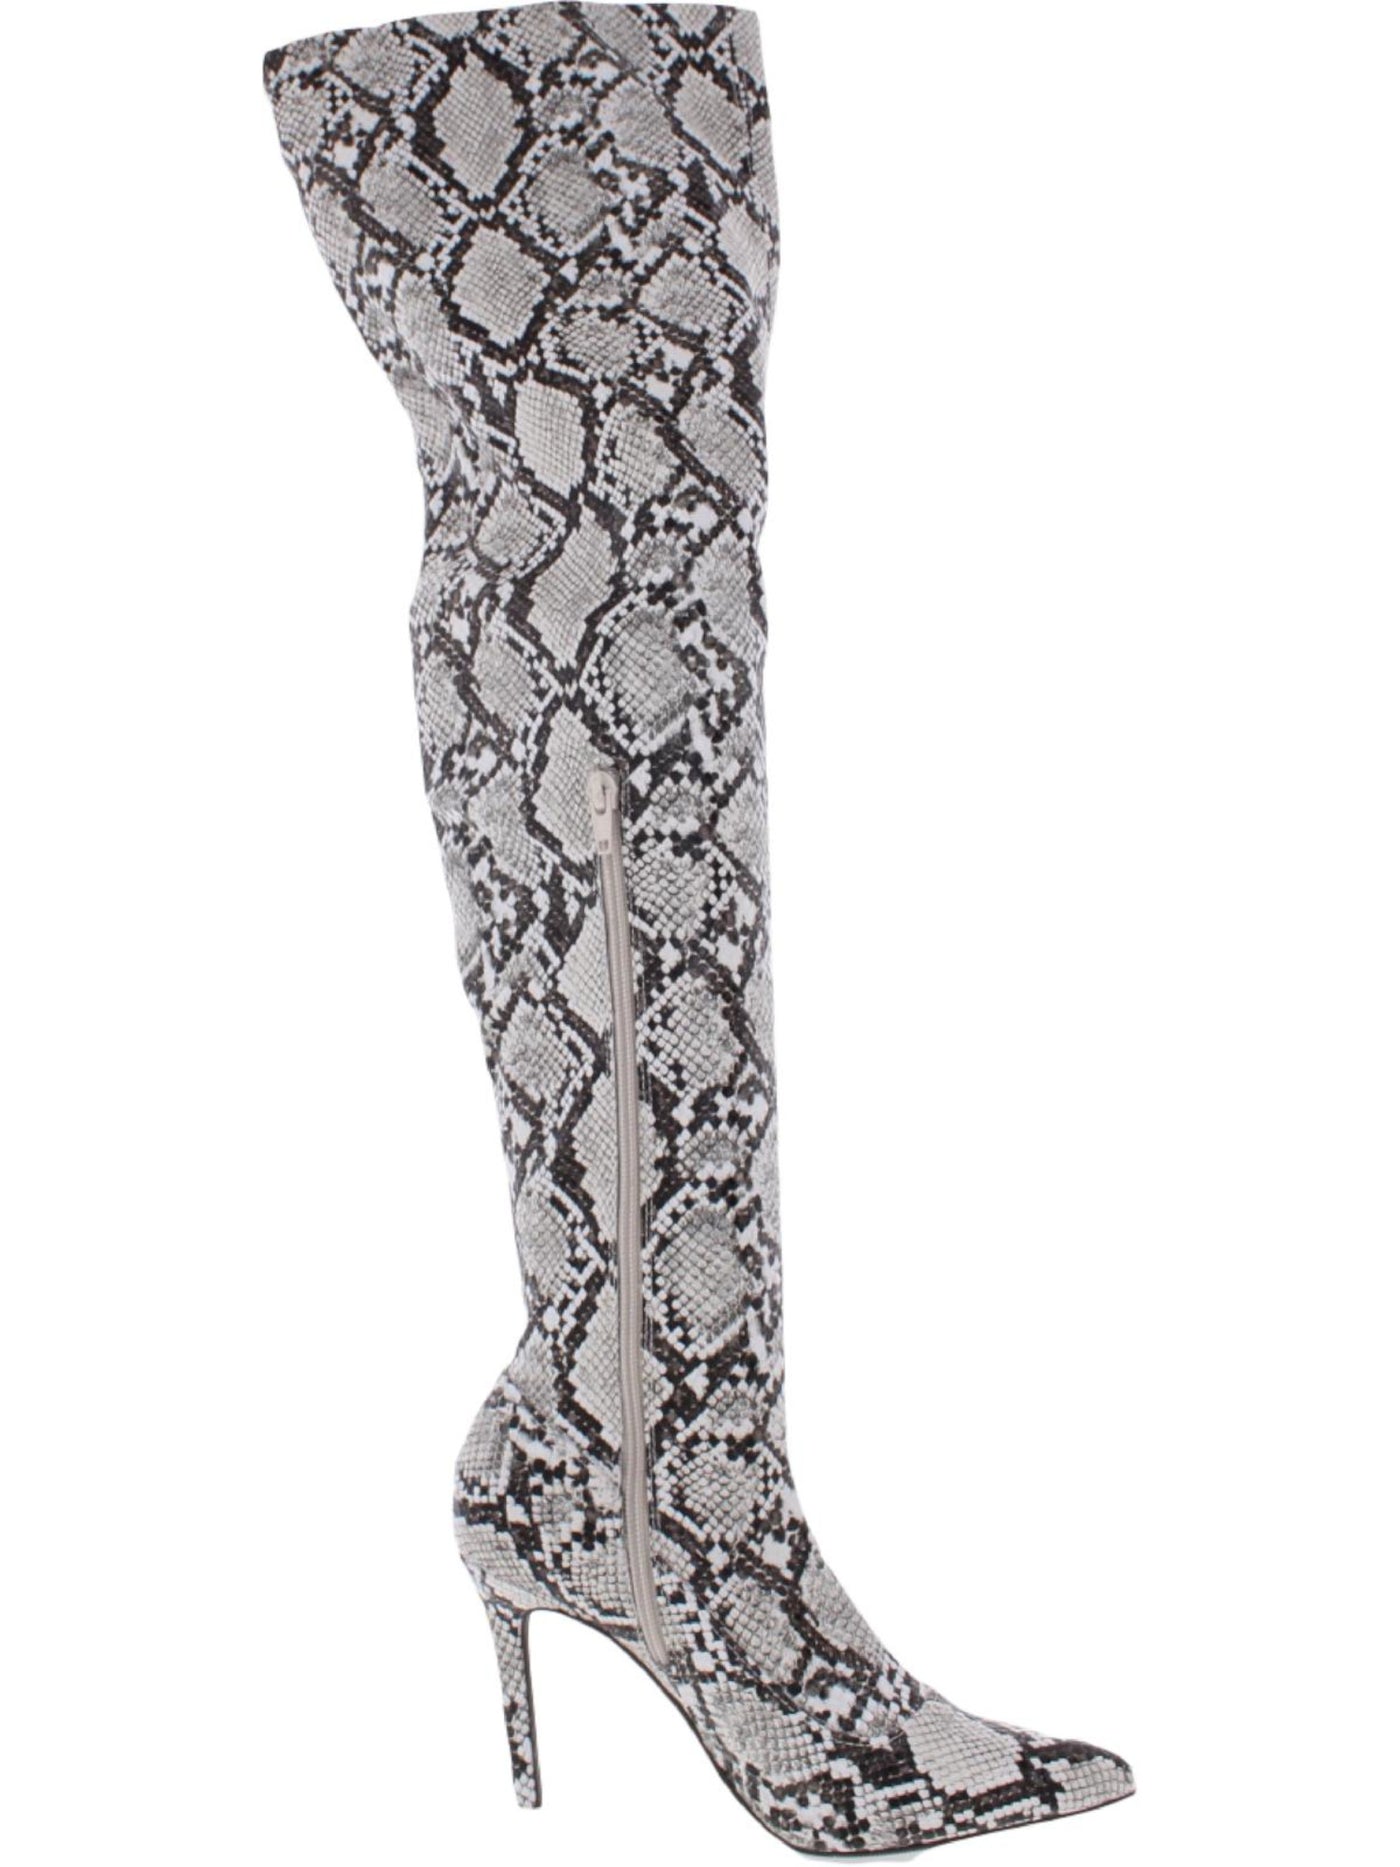 THALIA SODI Womens Beige Snake Print Comfort Cushioned Rominaa Pointed Toe Stiletto Zip-Up Dress Boots 6.5 M